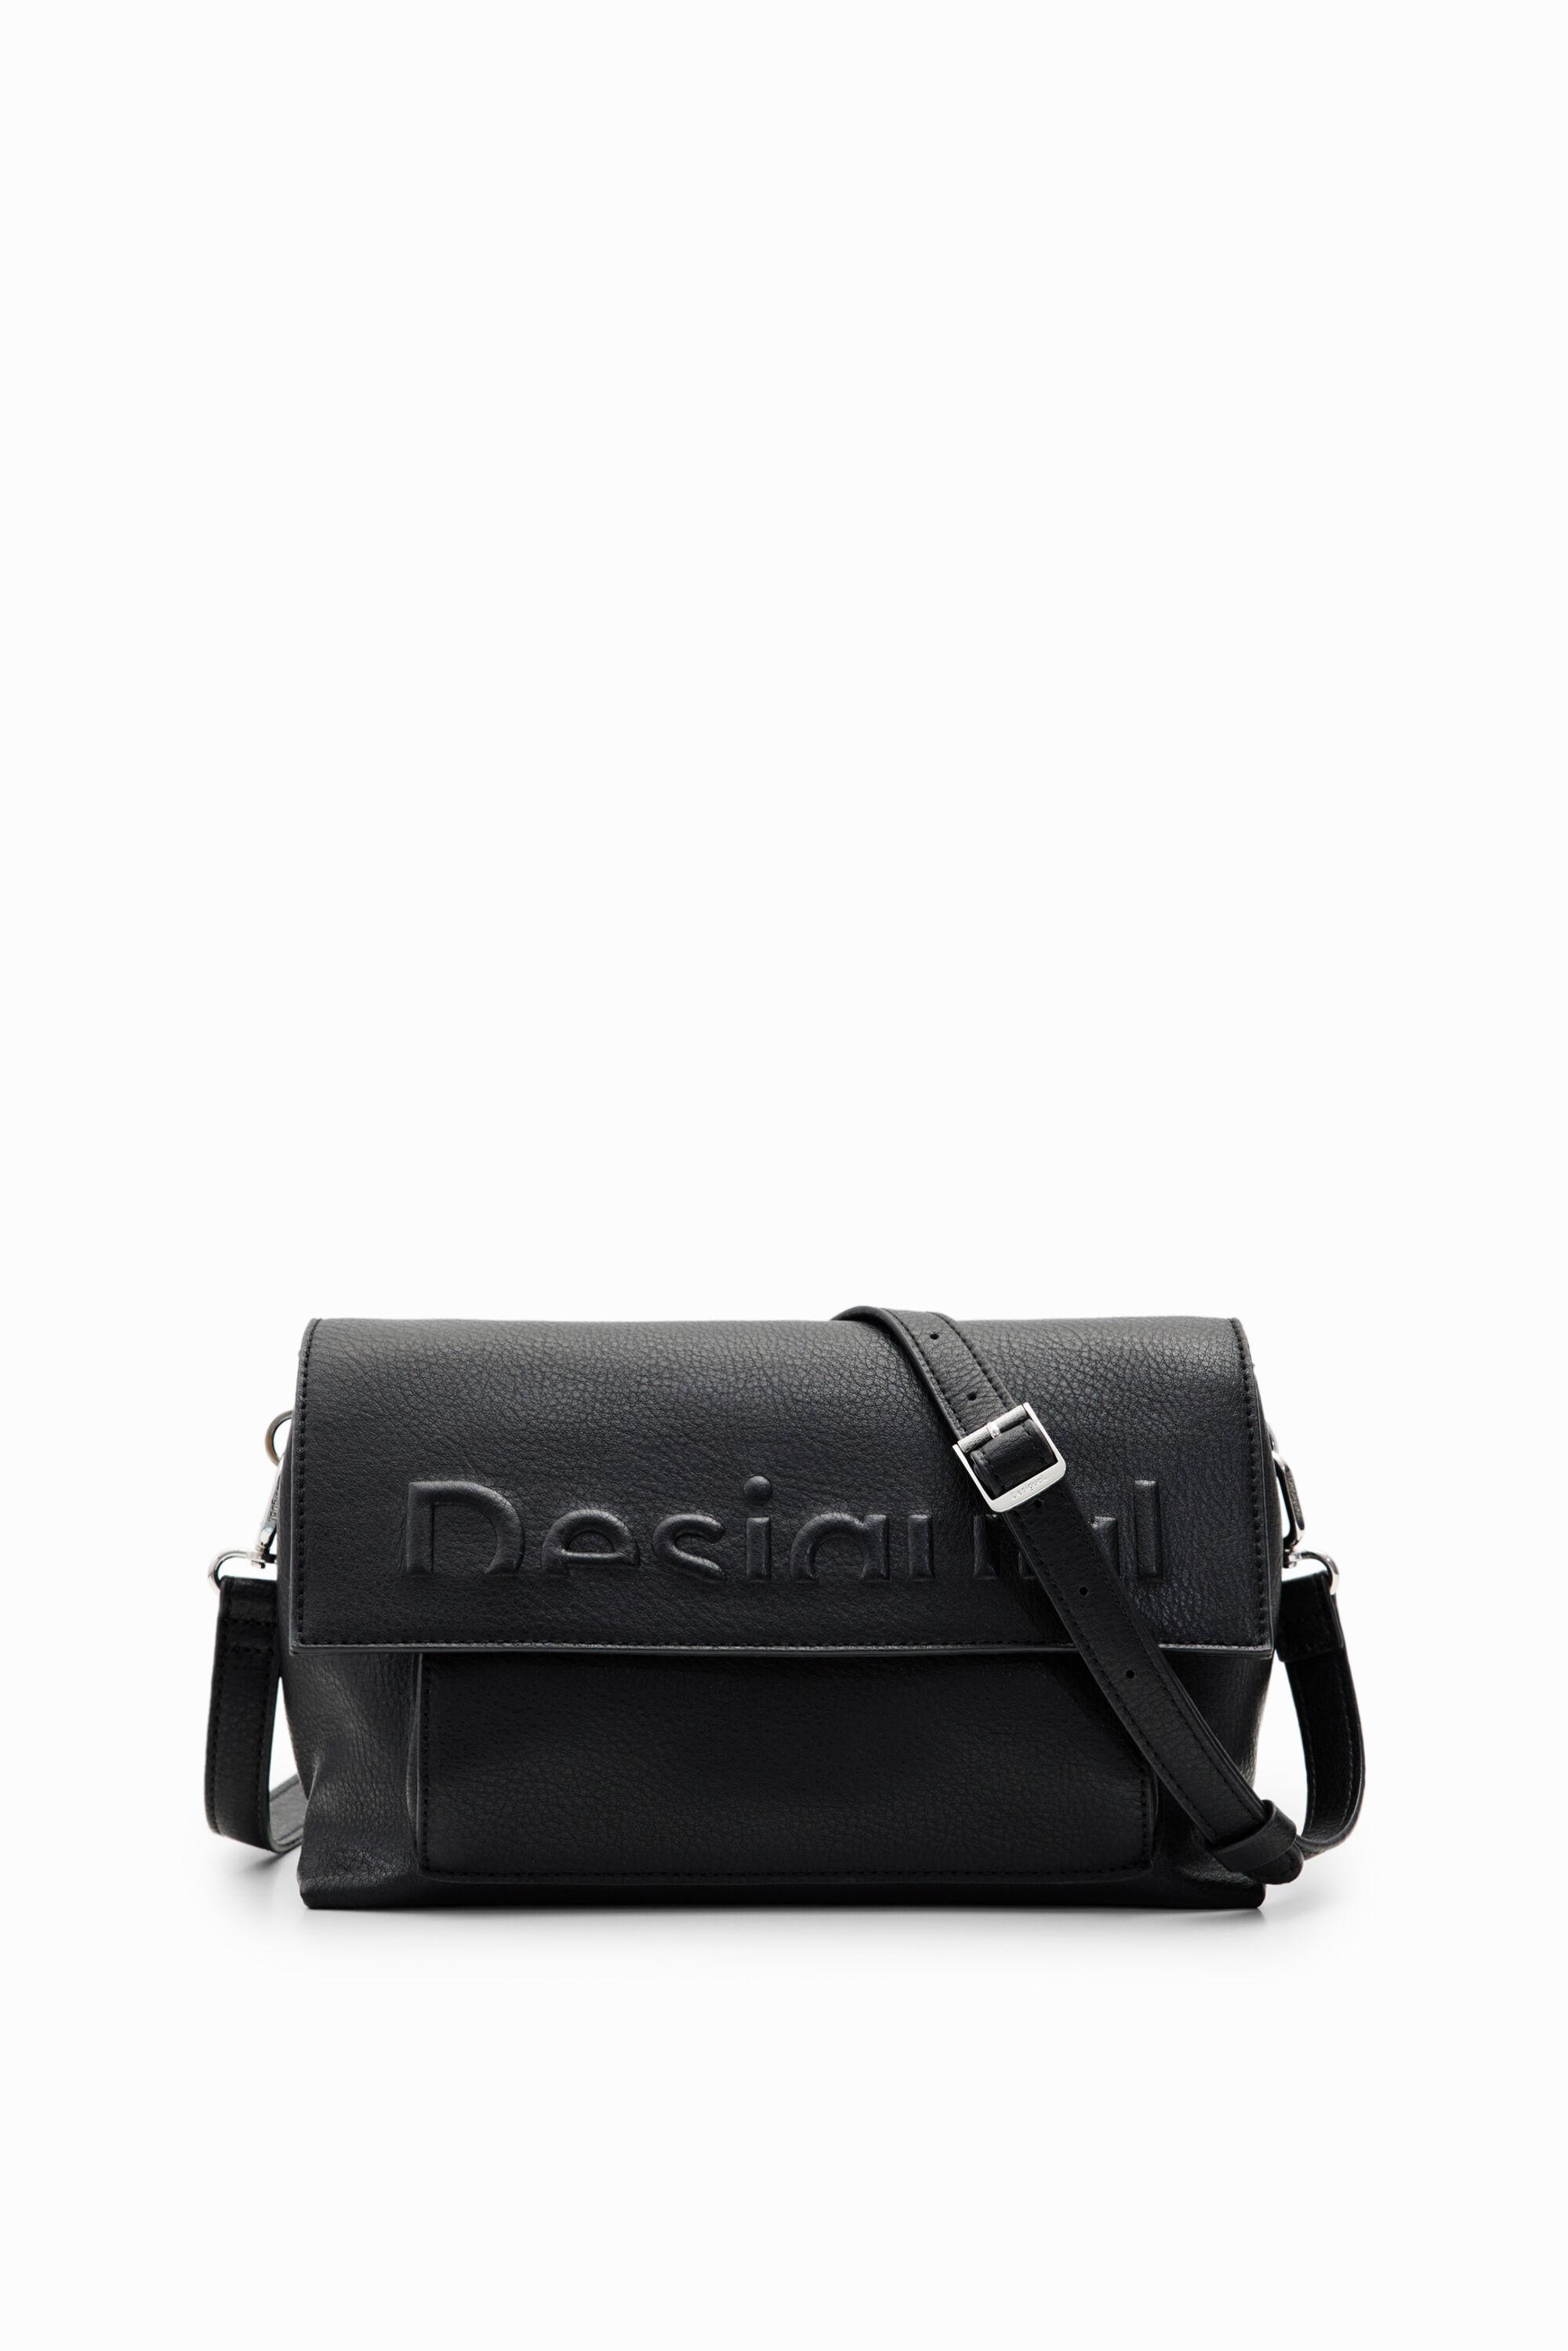 Desigual Midsize Half-logo Crossbody Bag in Black | Lyst